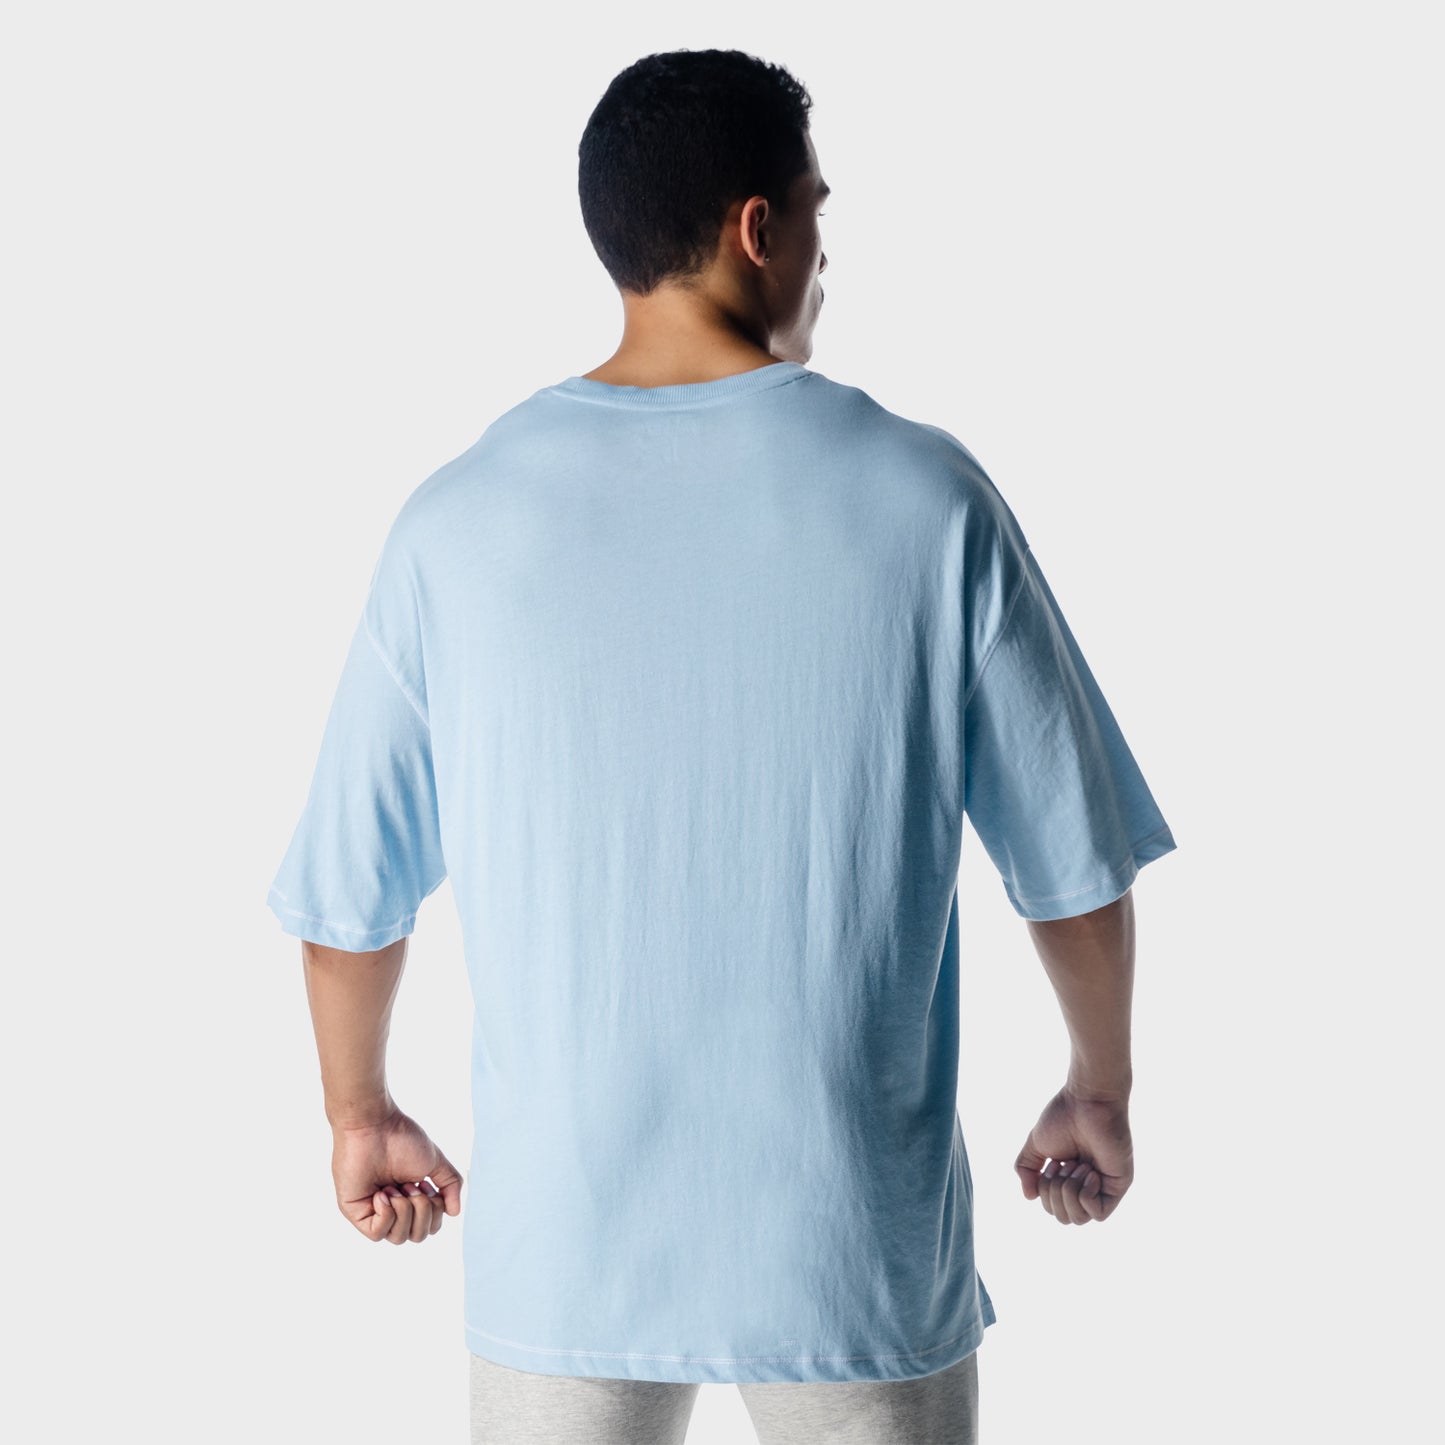 squatwolf-gym-shirts-golden-era-oversized-t-shirt-bluebell-workout-clothes-for-men